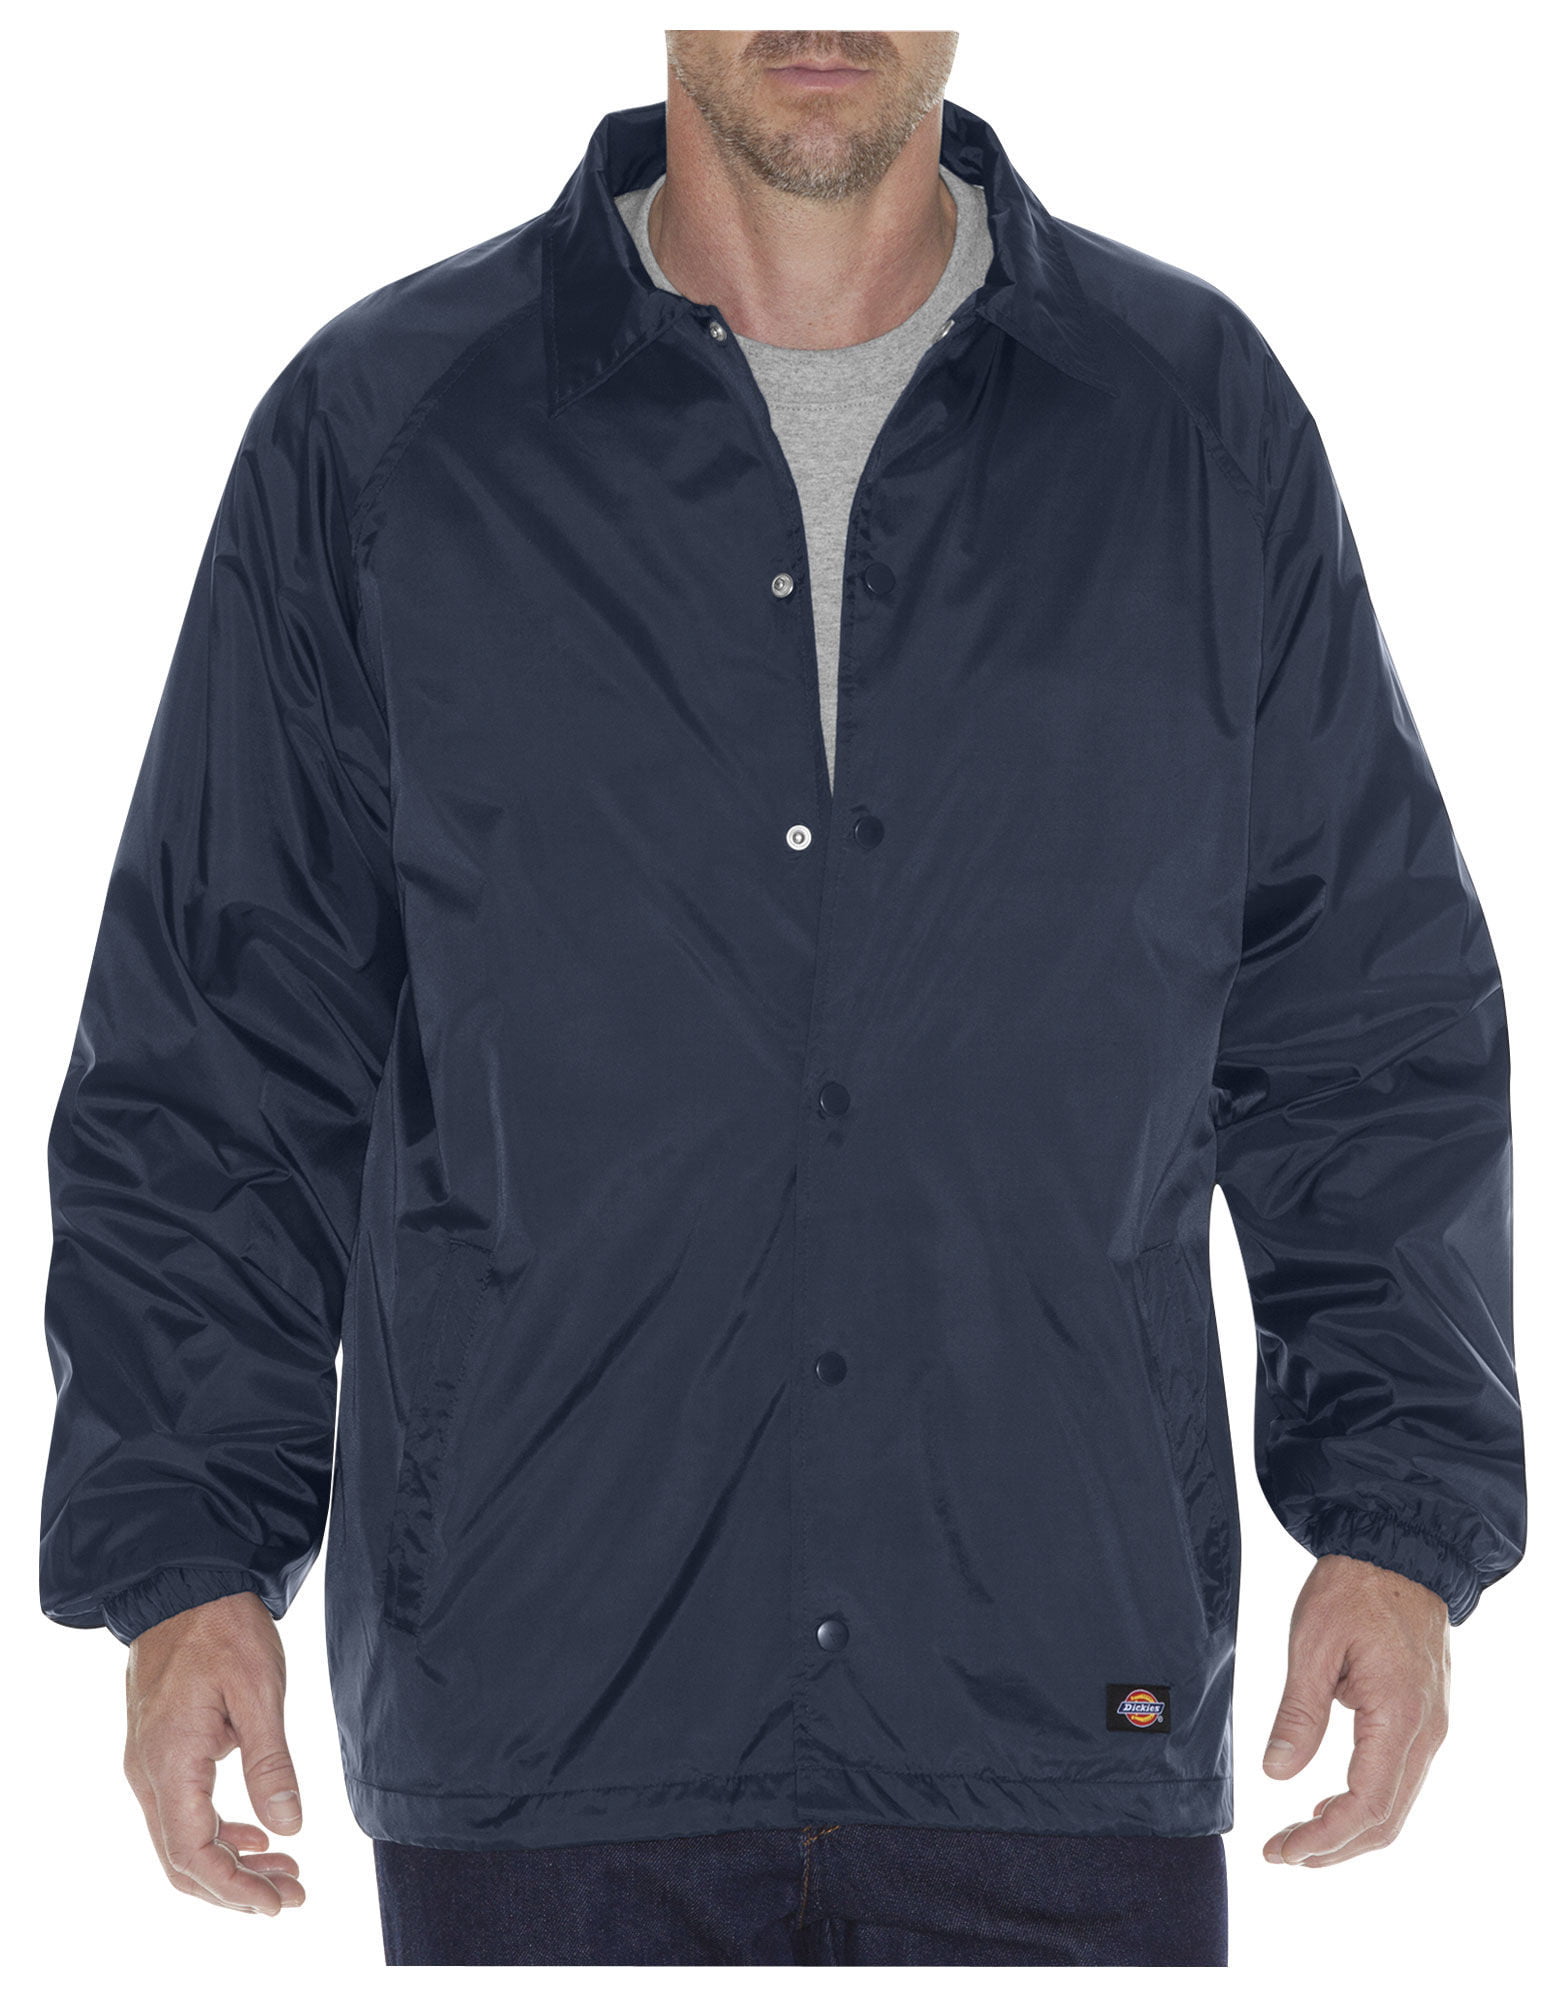 Dickies Mens Snap Front Nylon Jacket, M, Dark Navy Walmart Canada